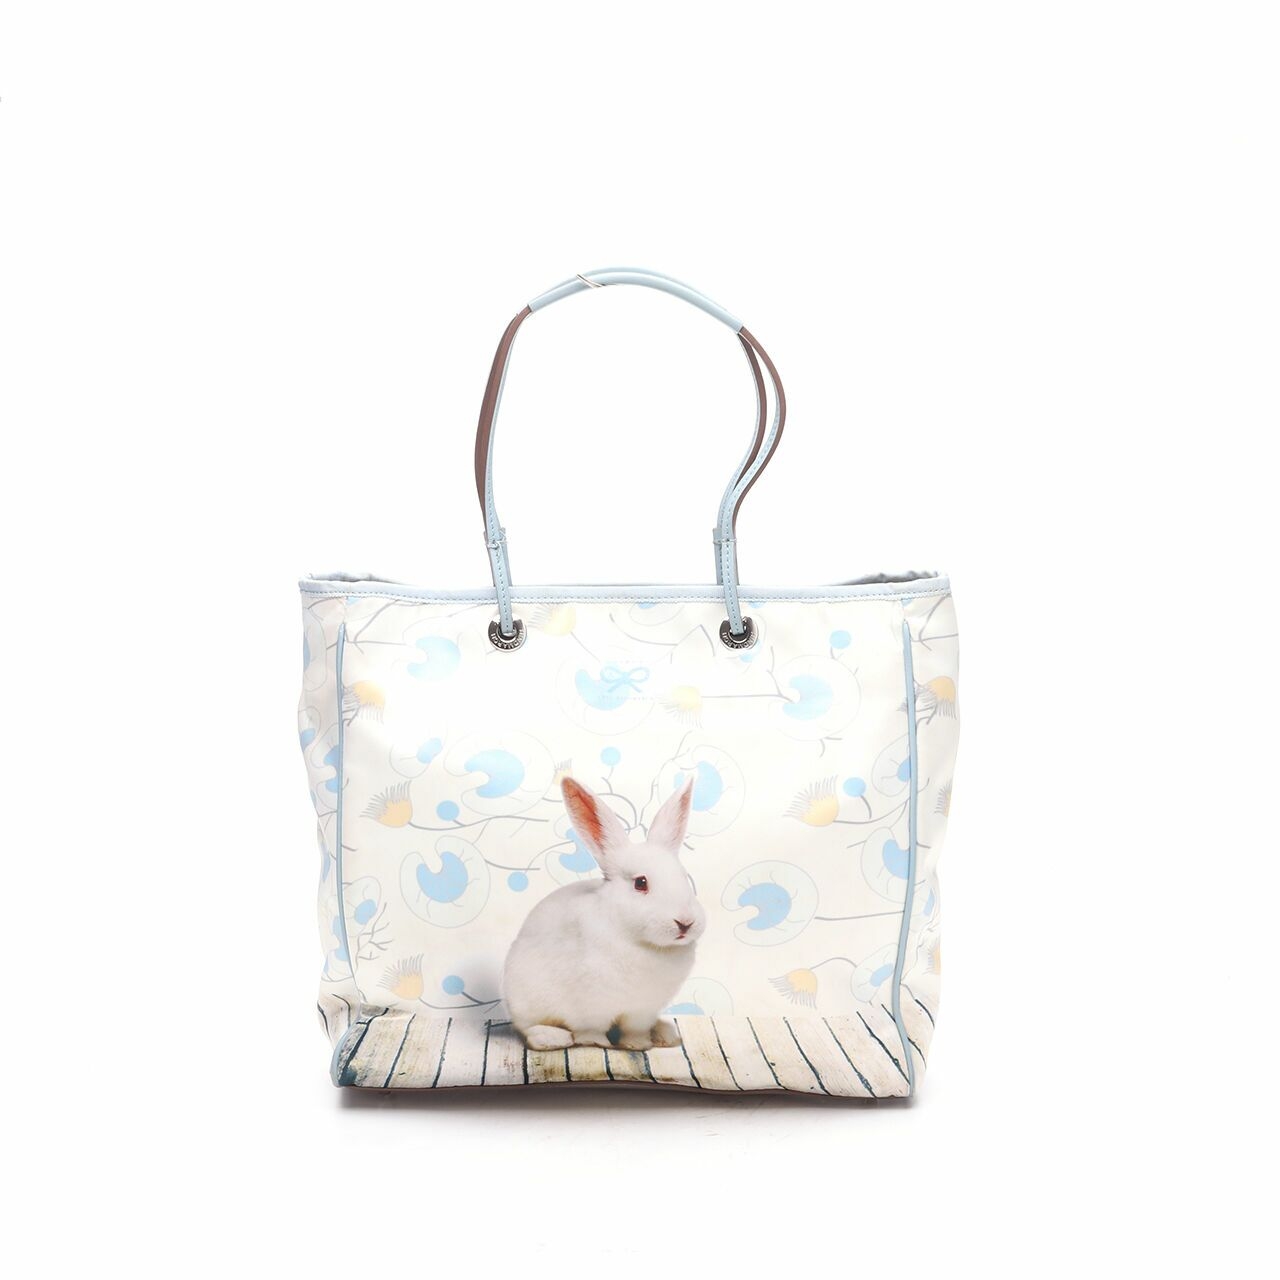 Anya Hindmarch White Bunny Tote Bag